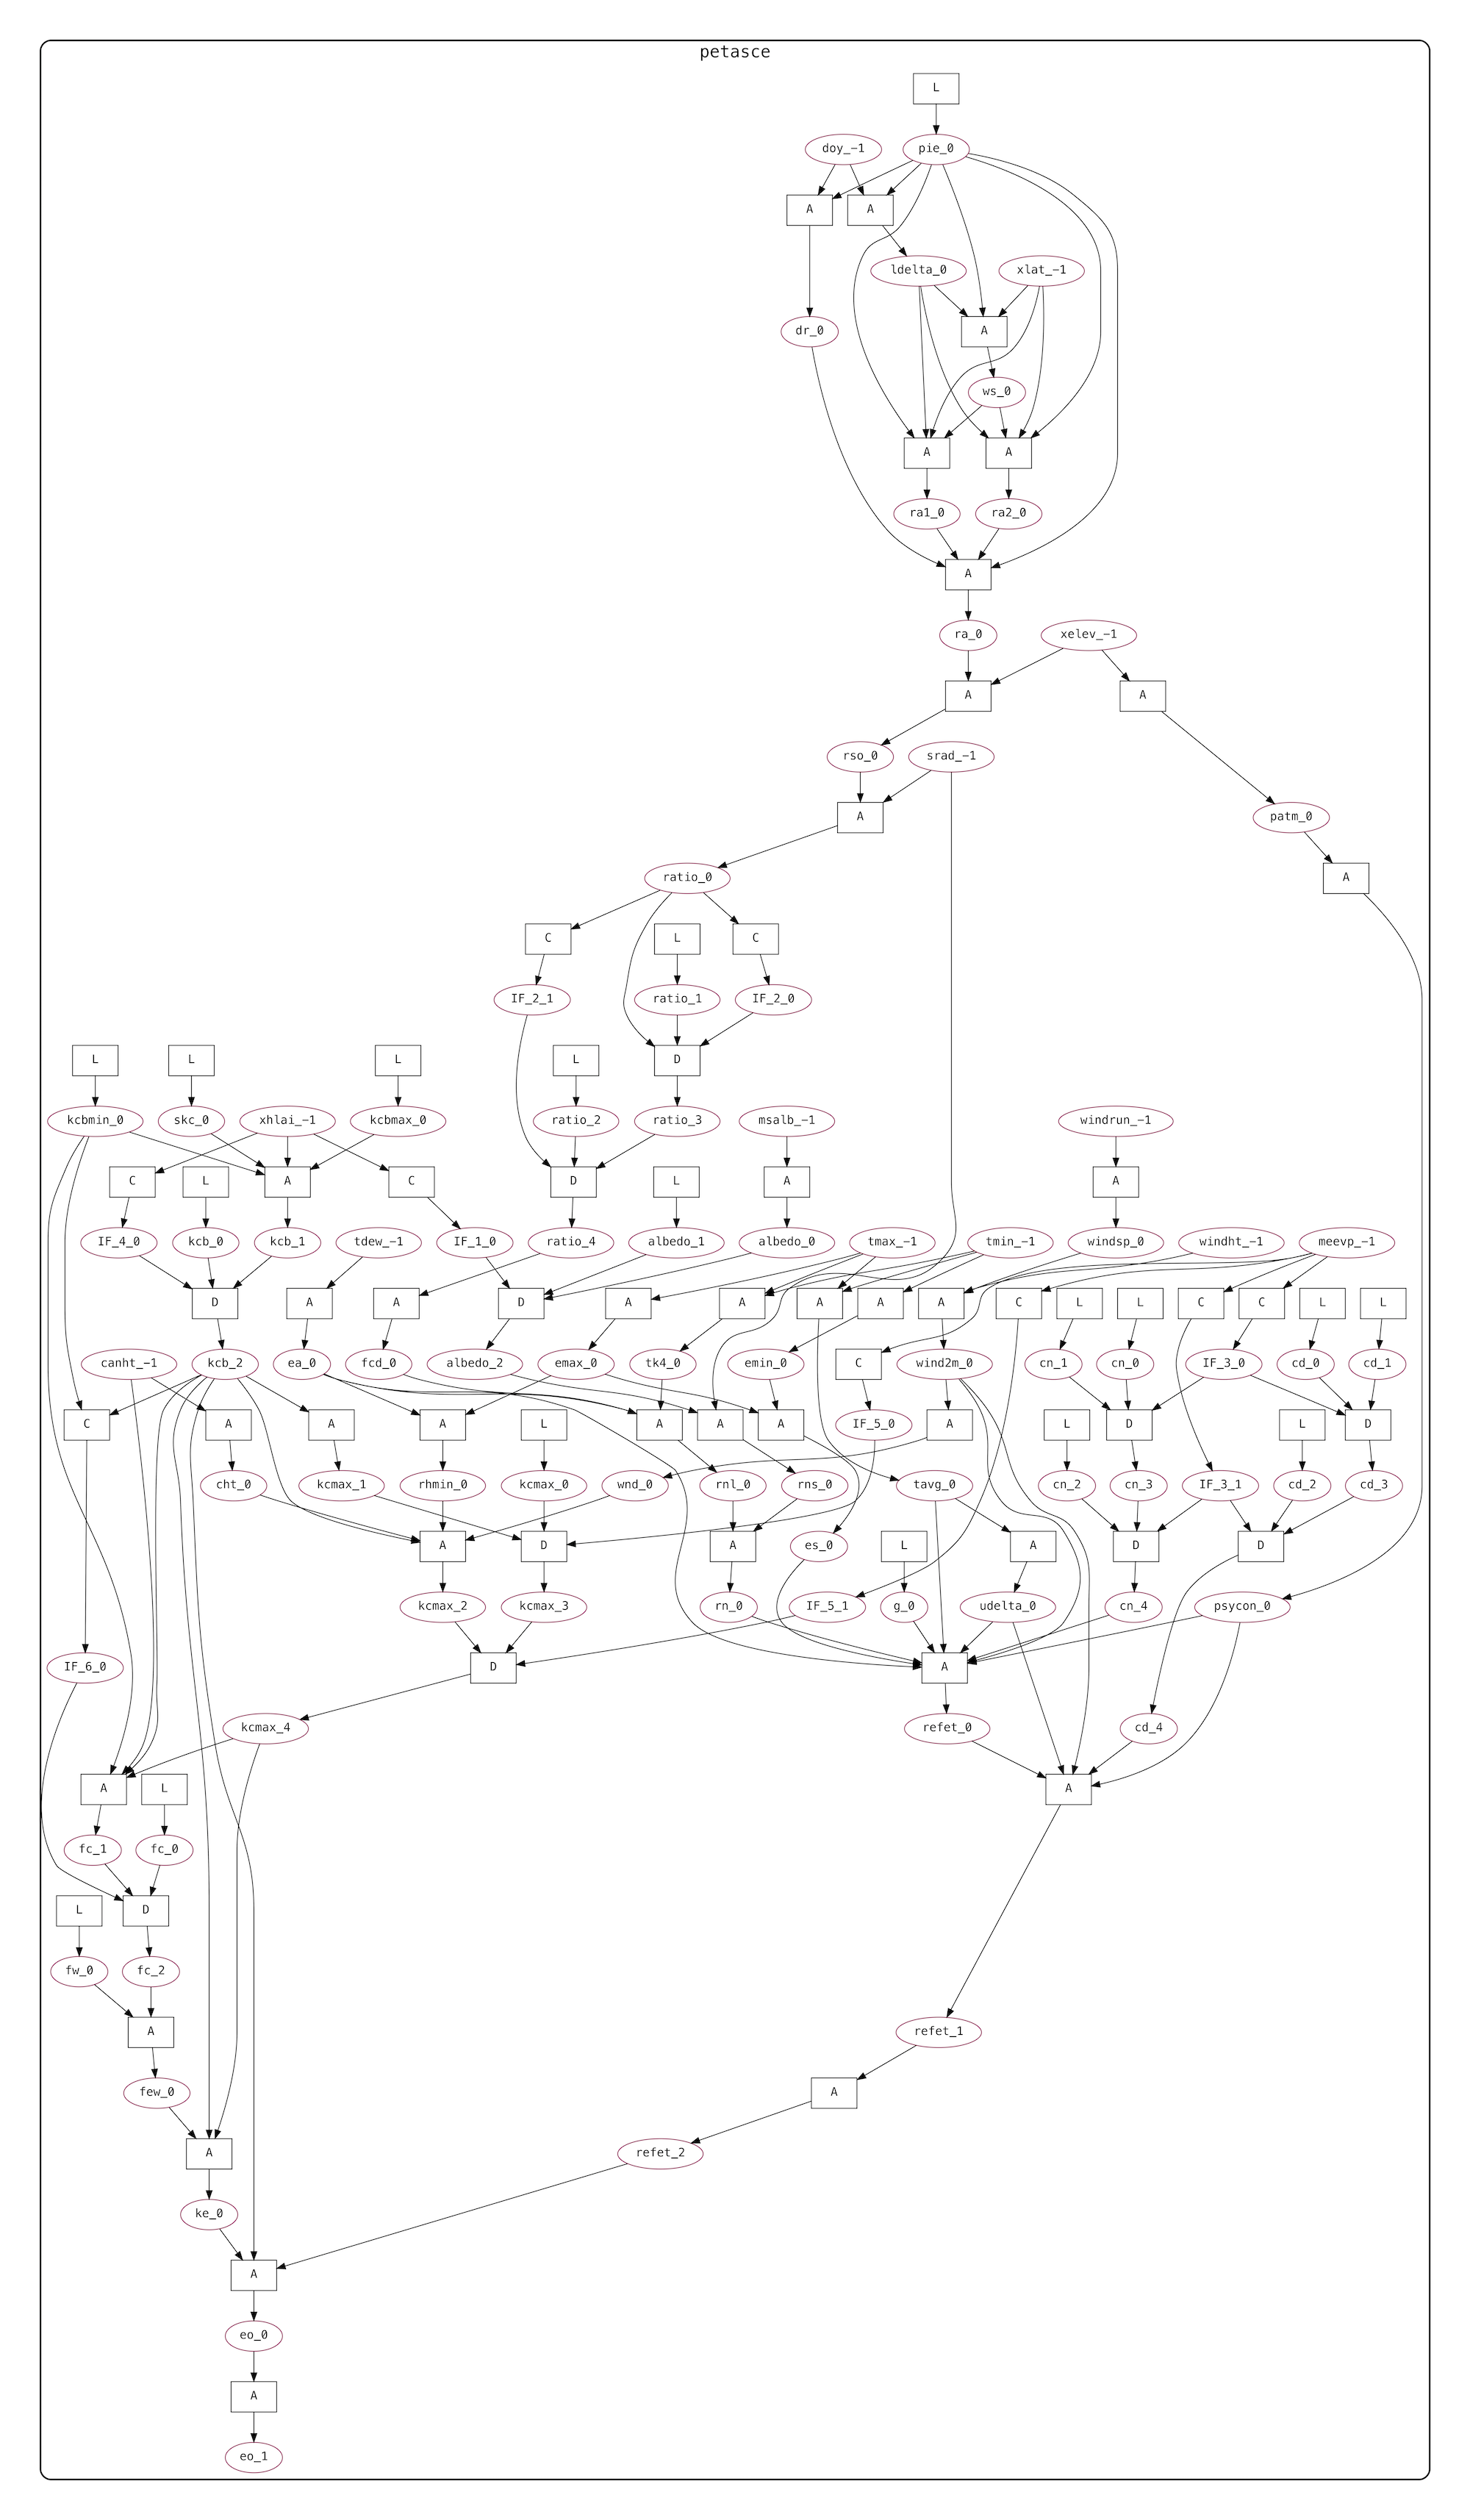 PETASCE GrFN computation graph.